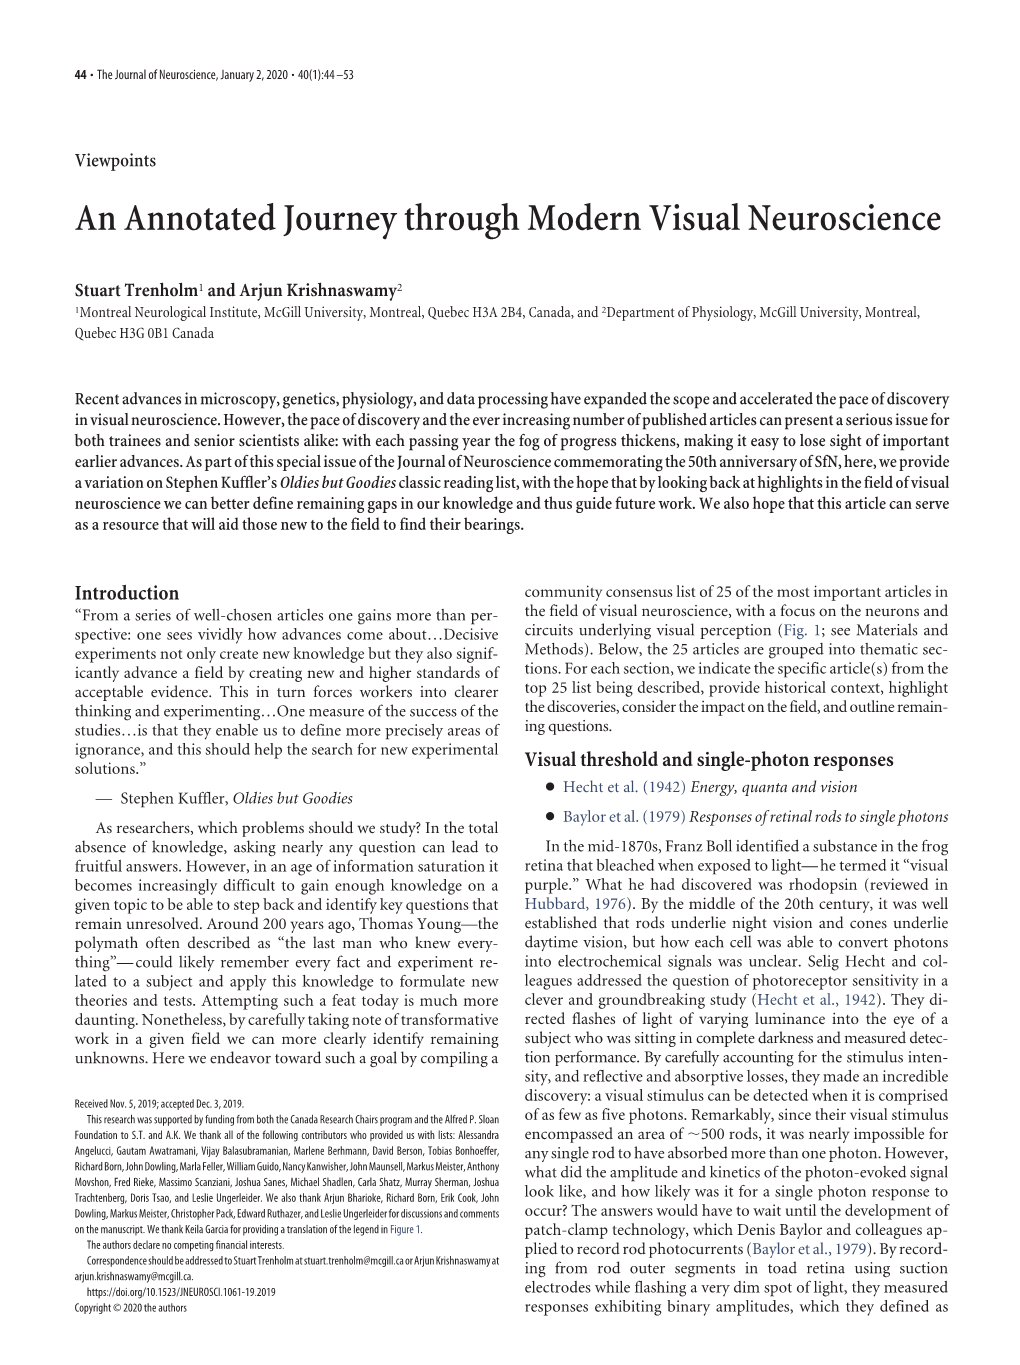 An Annotated Journey Through Modern Visual Neuroscience